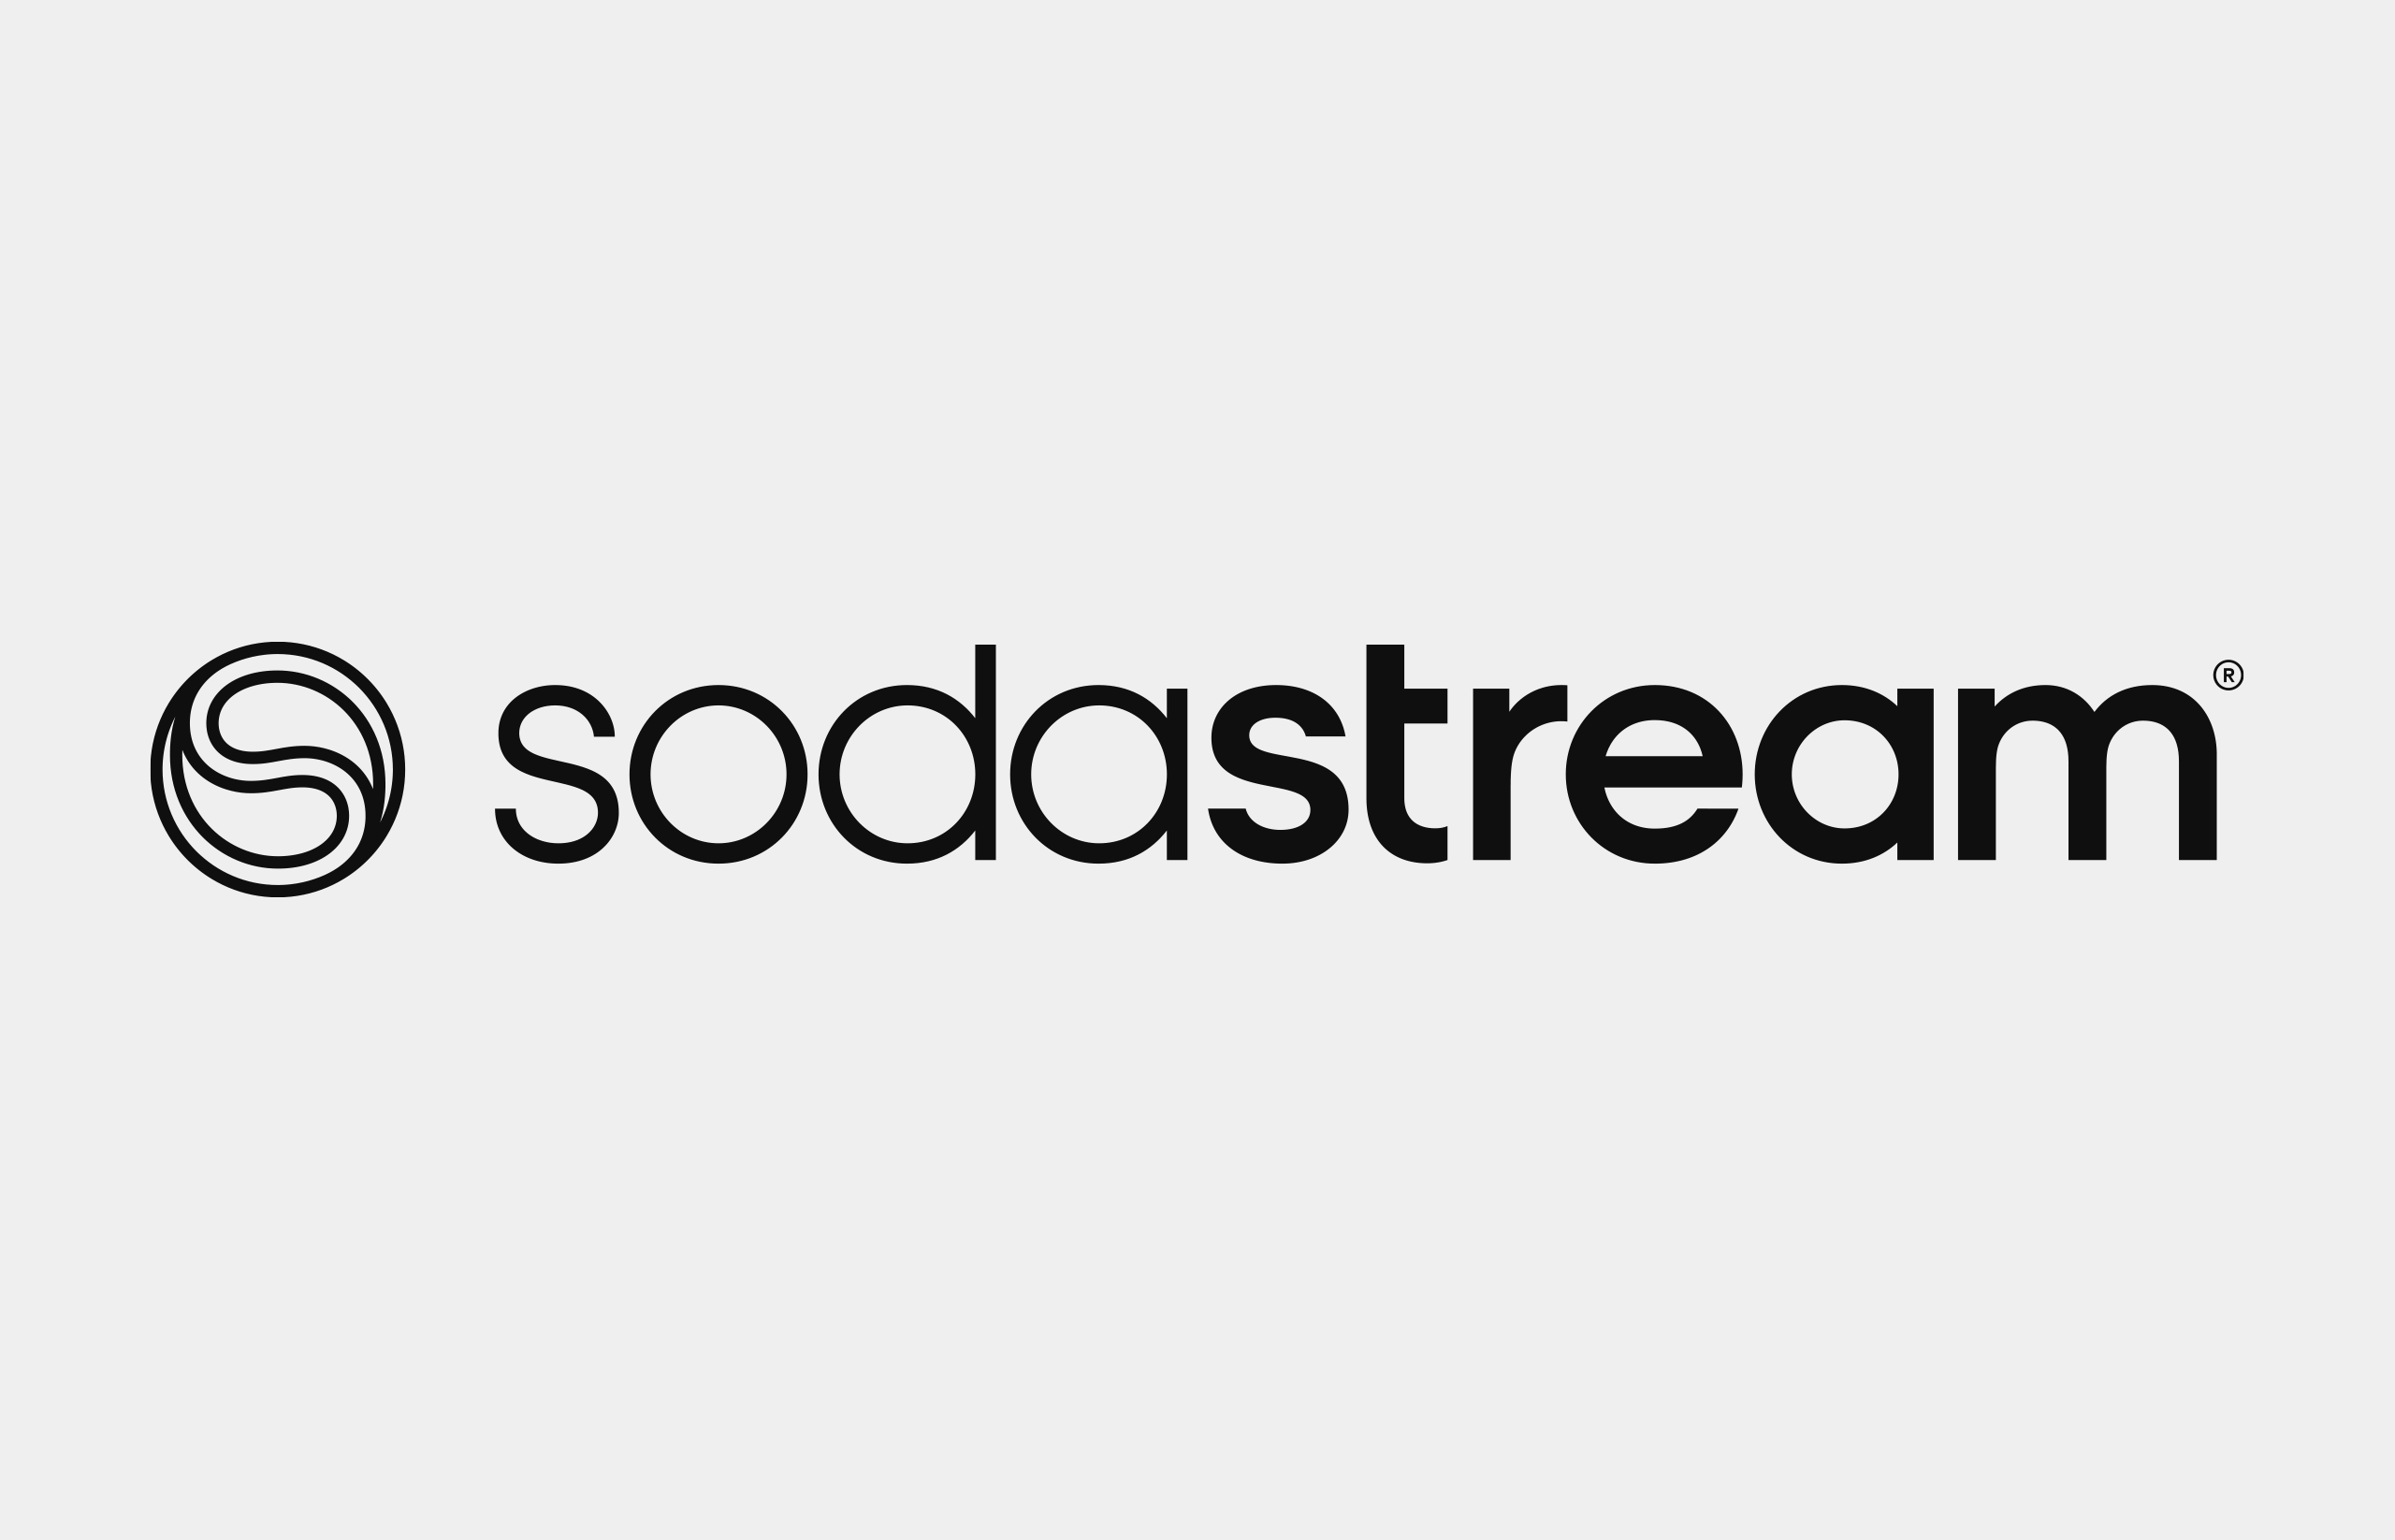 Sodastream Wordmark & Symbol –